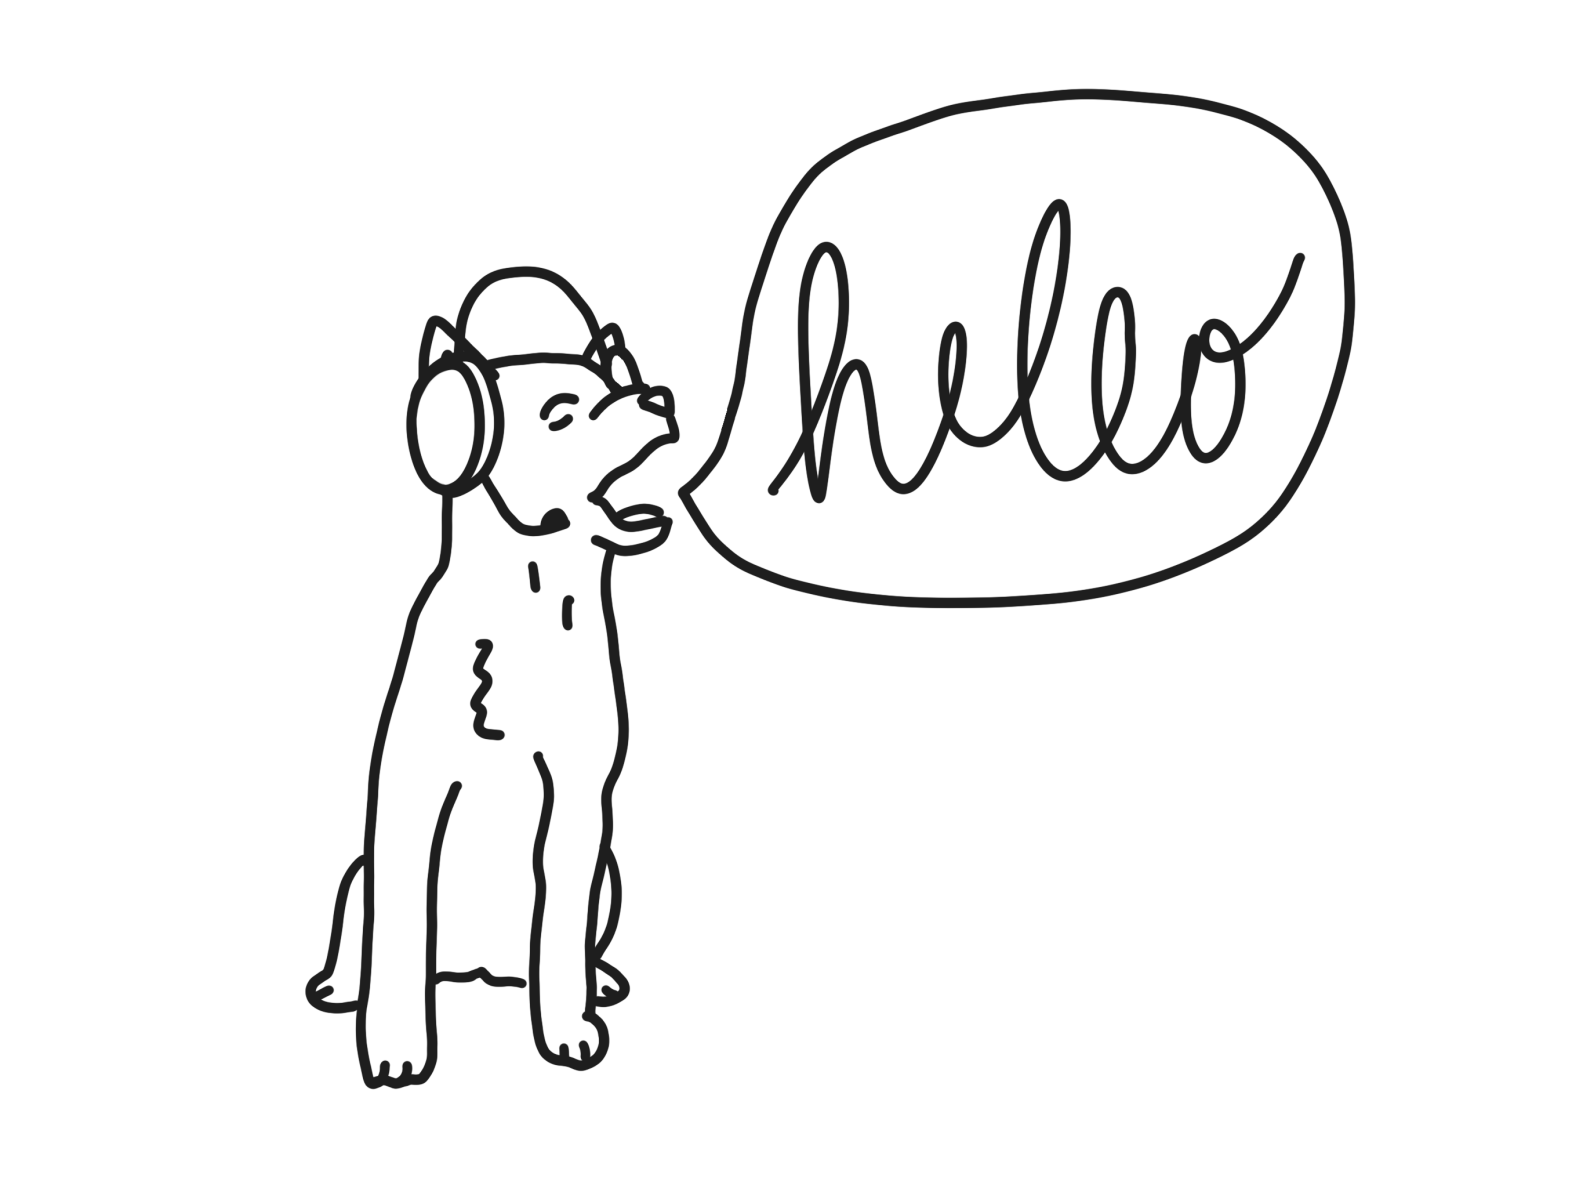 how-to-teach-a-dog-to-speak-by-dana-smith-on-dribbble